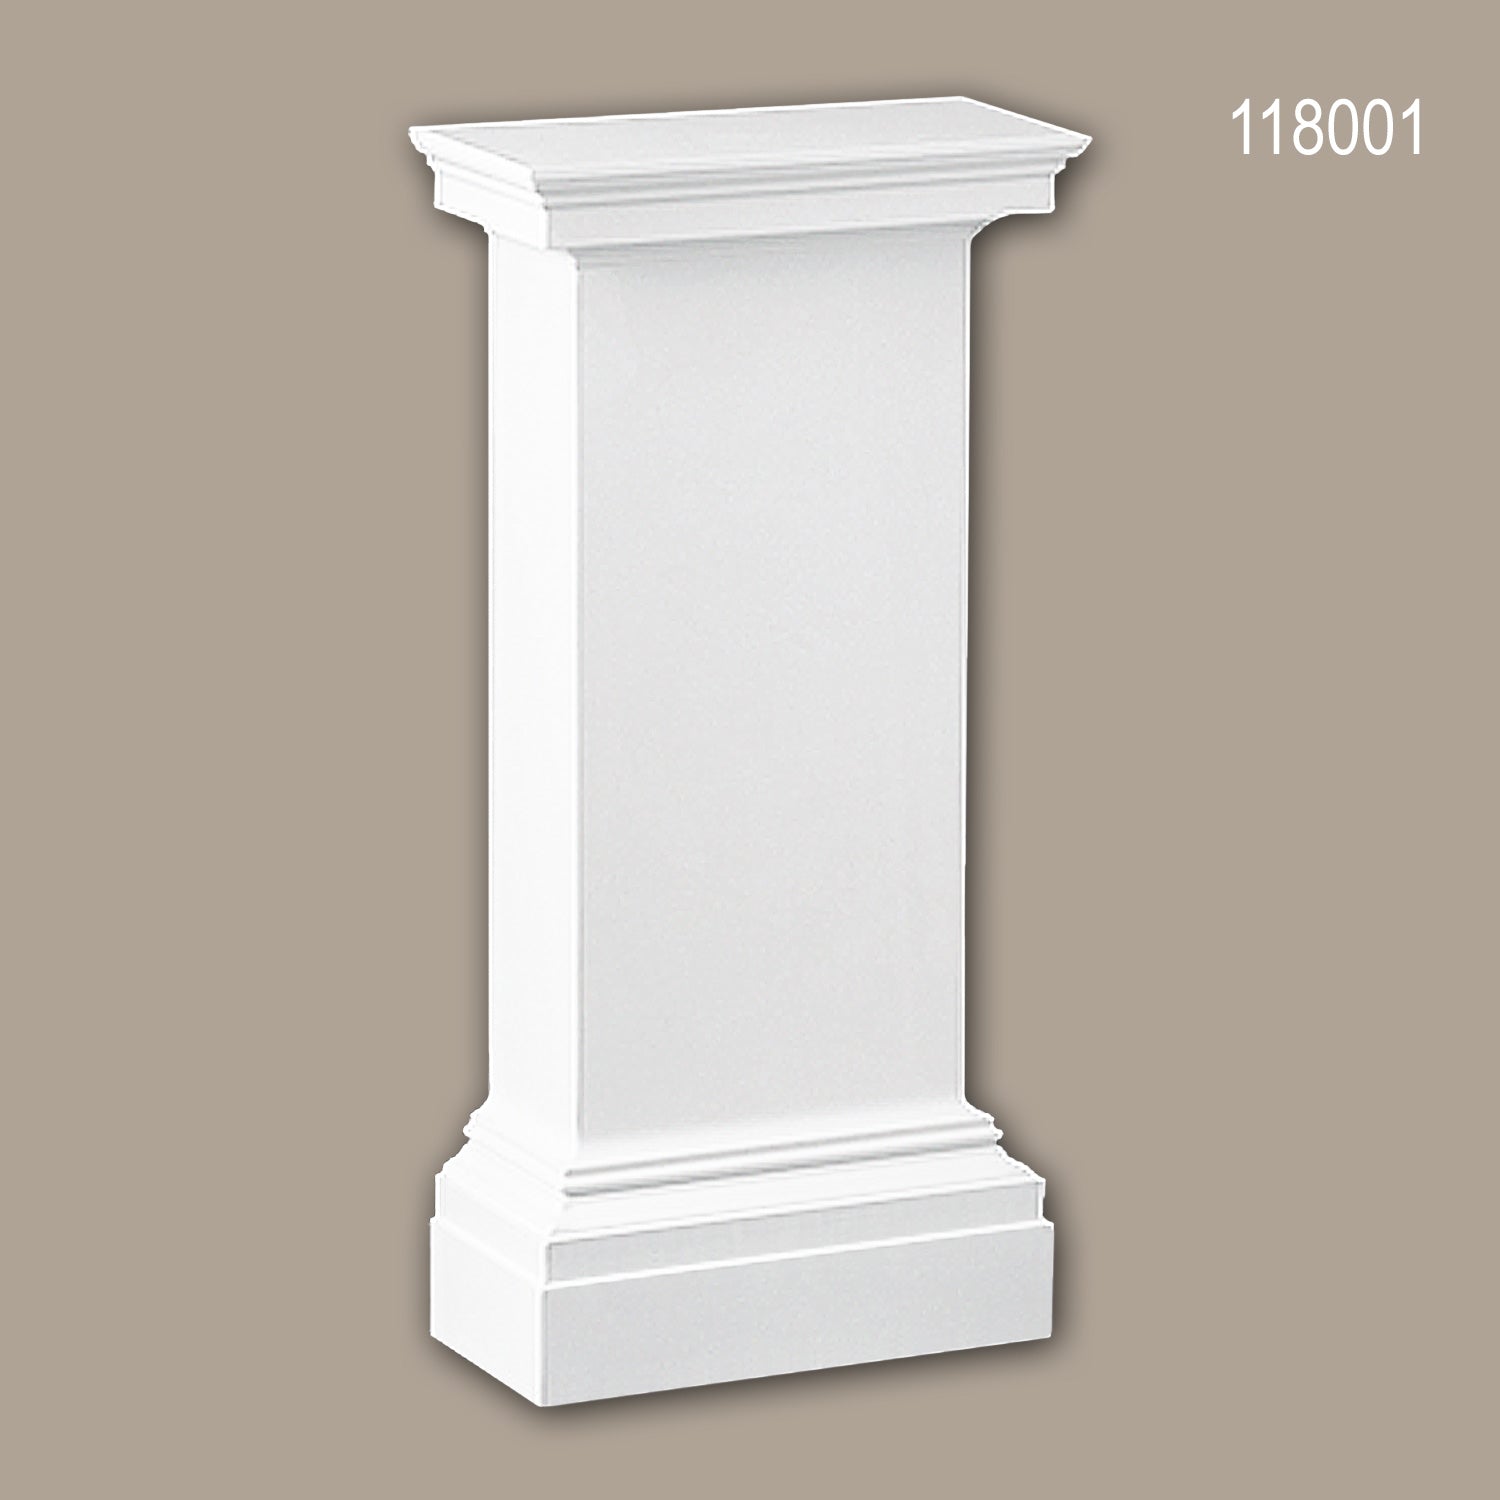 Half-column pedestal Profhome 118001 Column Decorative element Neo-Classicism style white